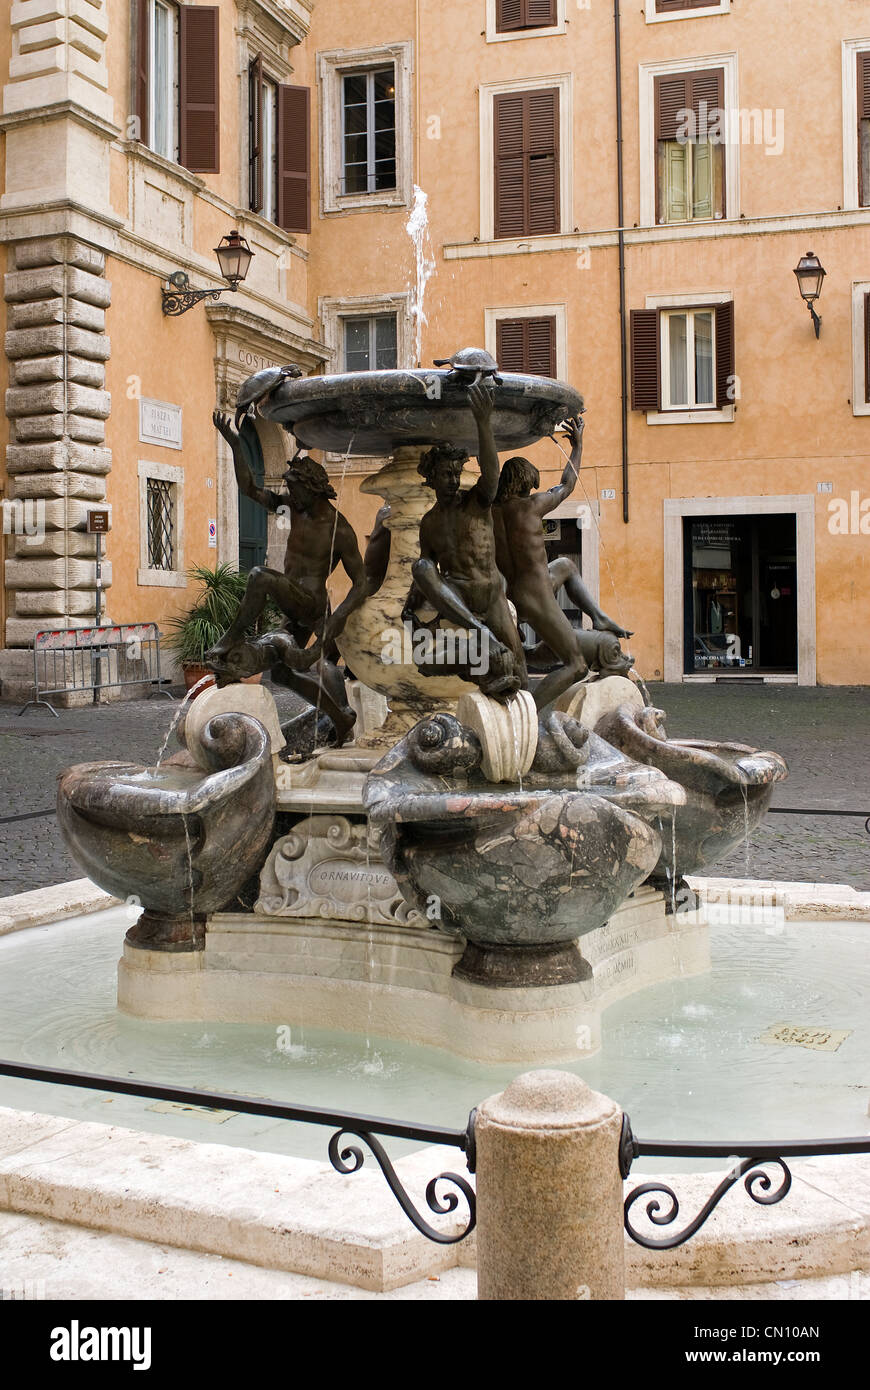 Fontana delle Tartarughe, conçue par Giacomo della Porta. Piazza Mattei, Rome, Latium, Italie Banque D'Images